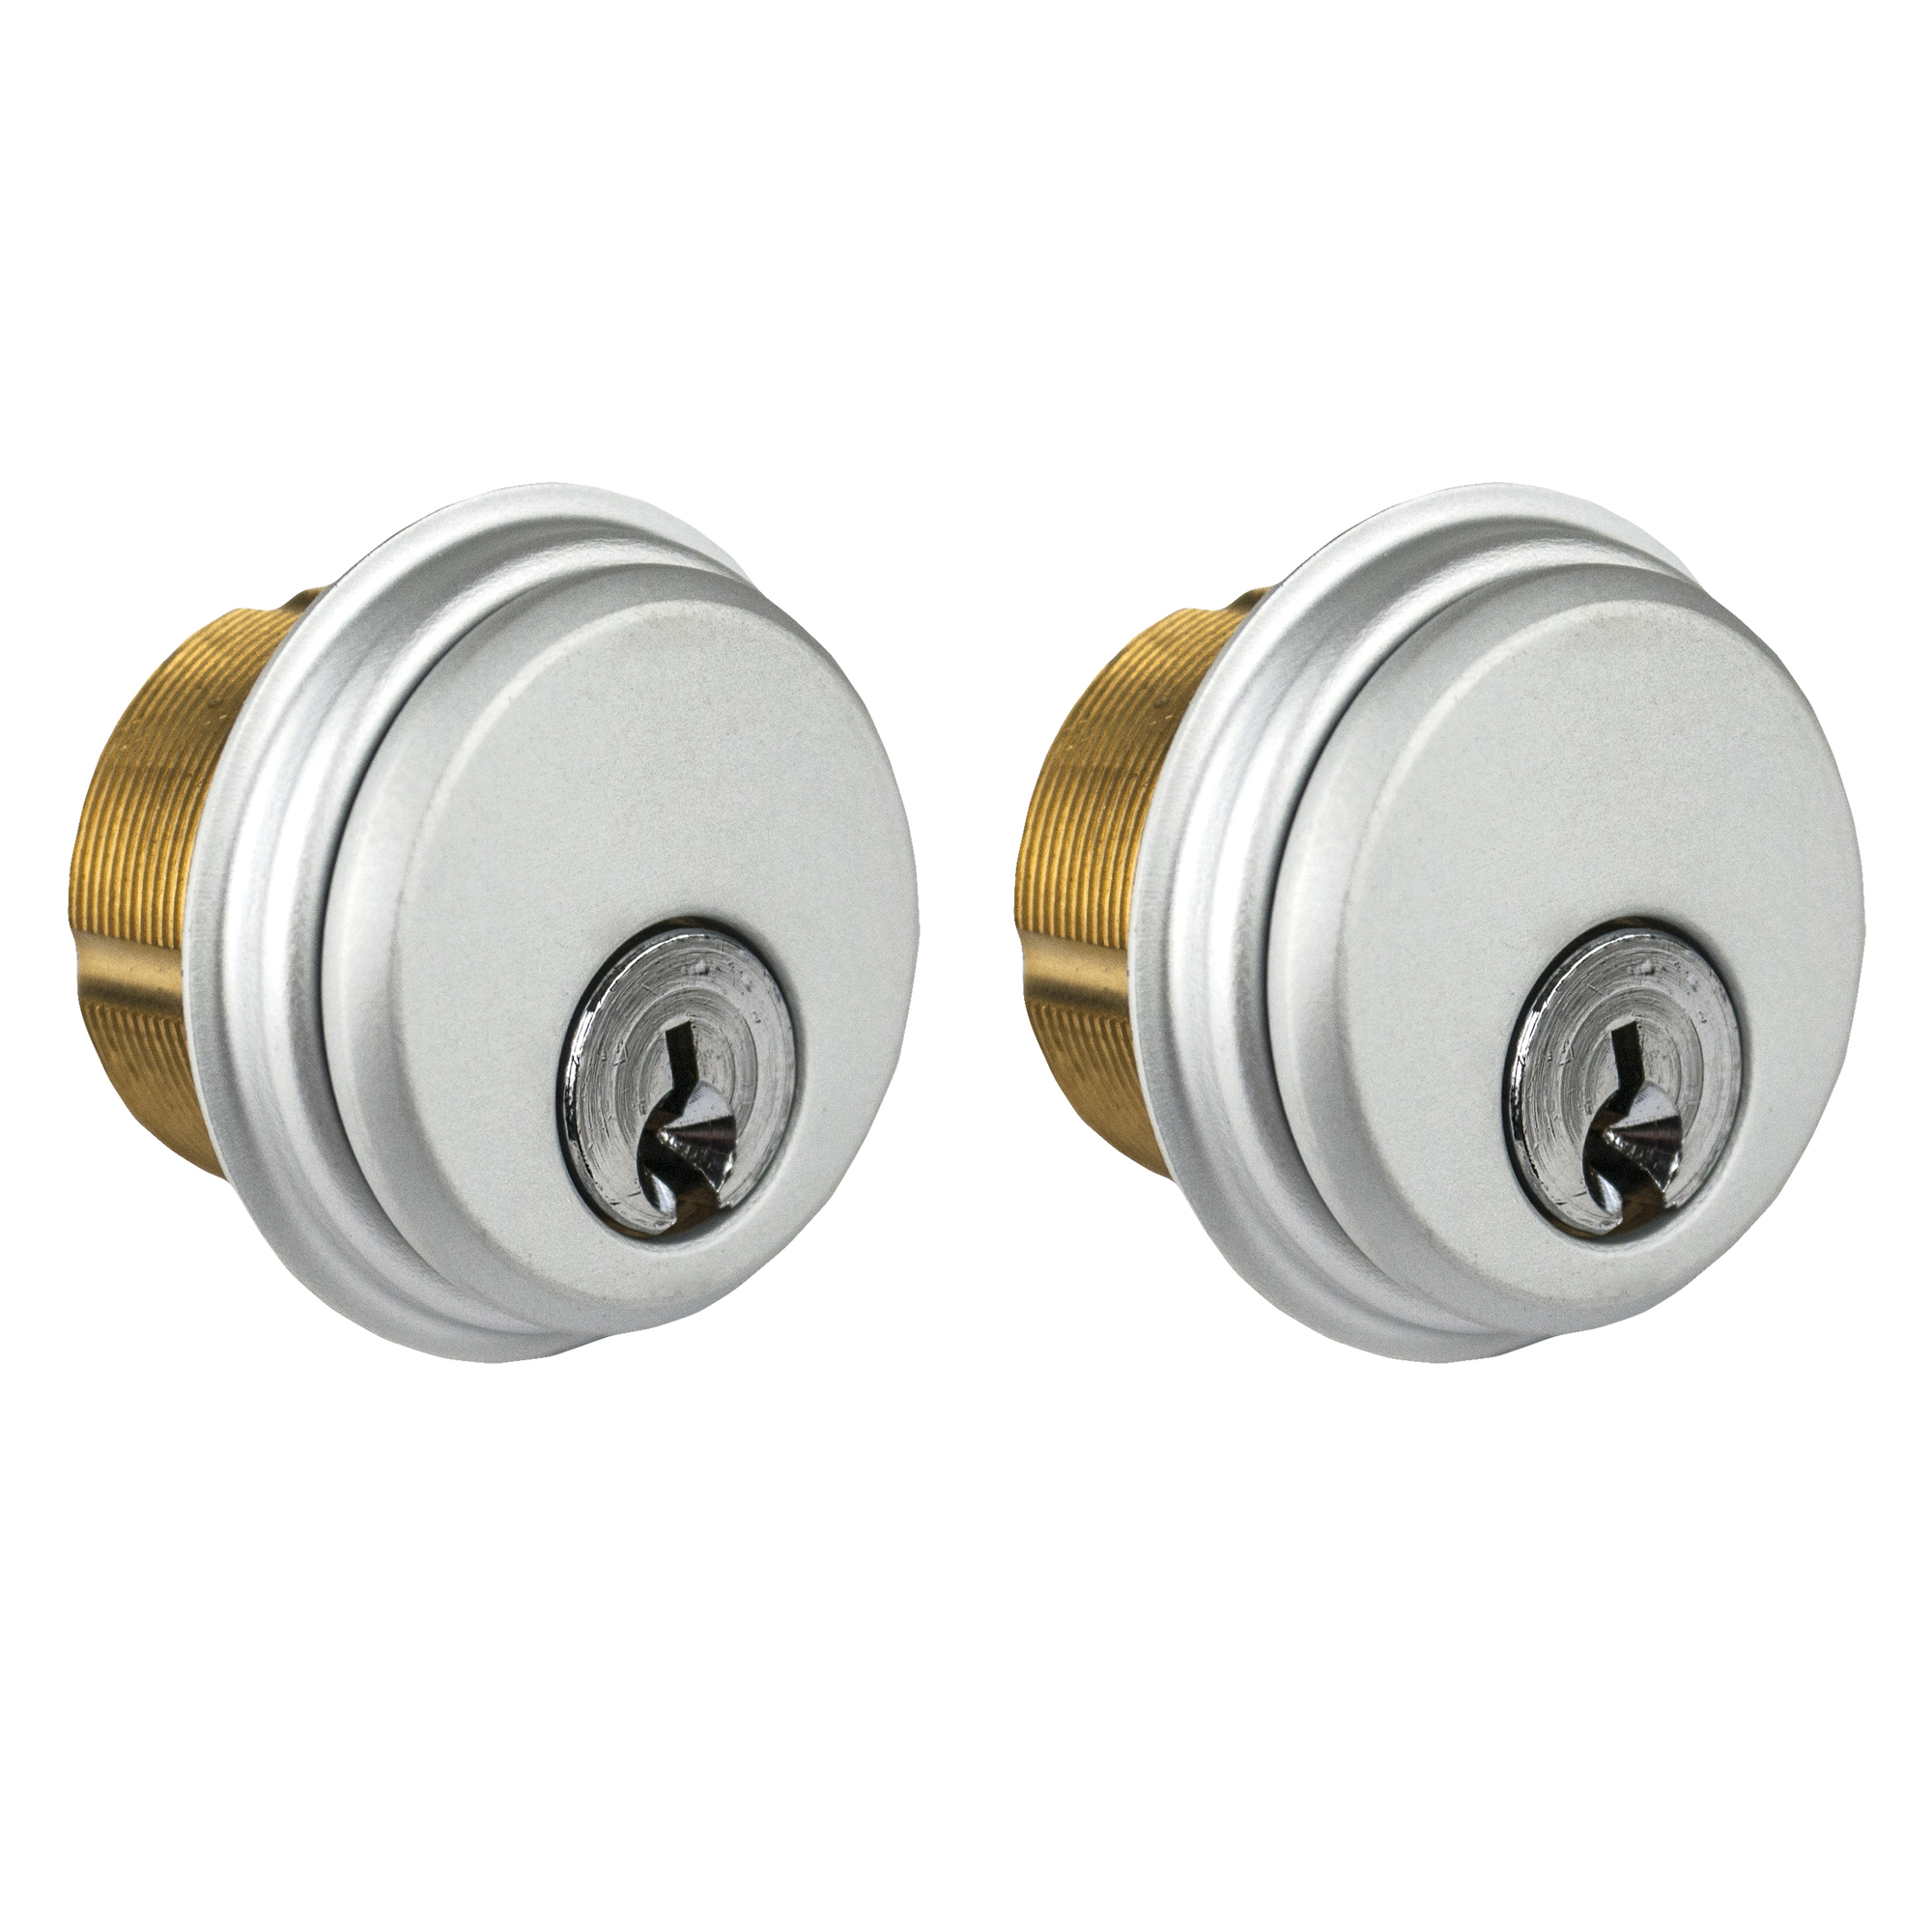 Global Door Controls, 1-5/32Inch Mortise Double Brass Keyed Alike Cylinder Lock, Model TH1100-BCX2AL